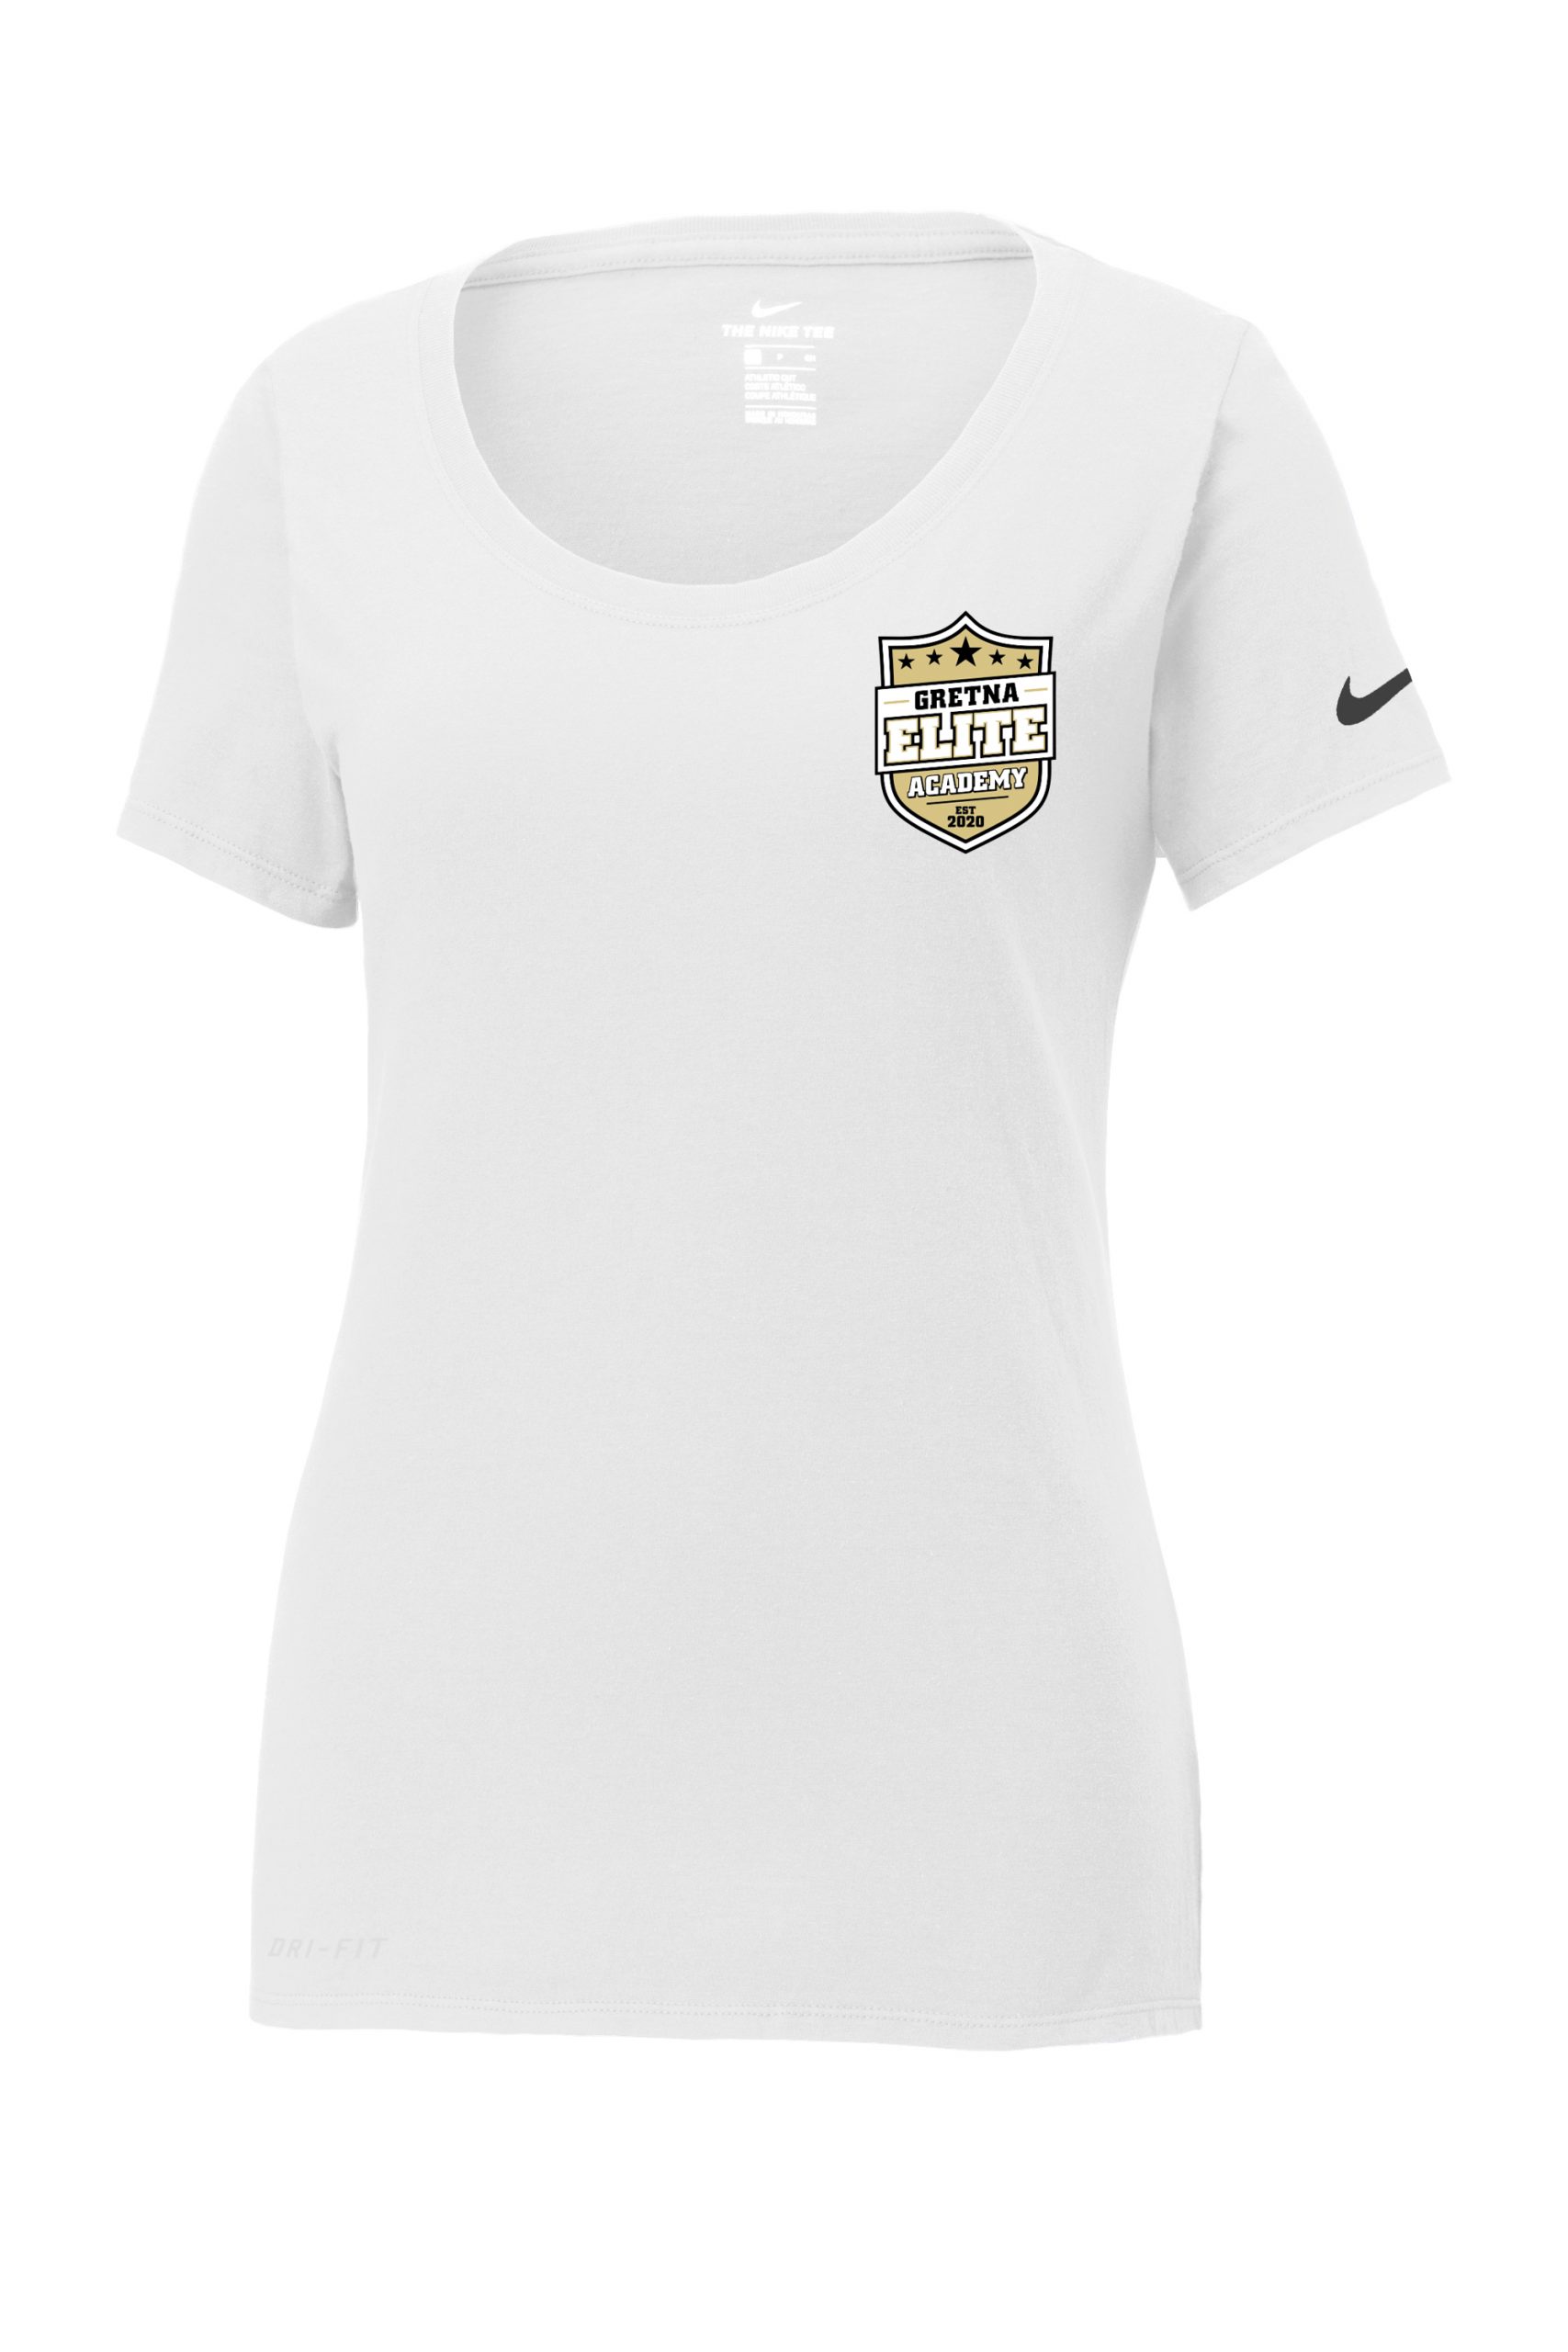 Gretna Elite Shield Logo Nike Ladies Dri-FIT Cotton/Poly Scoop Neck Tee ...